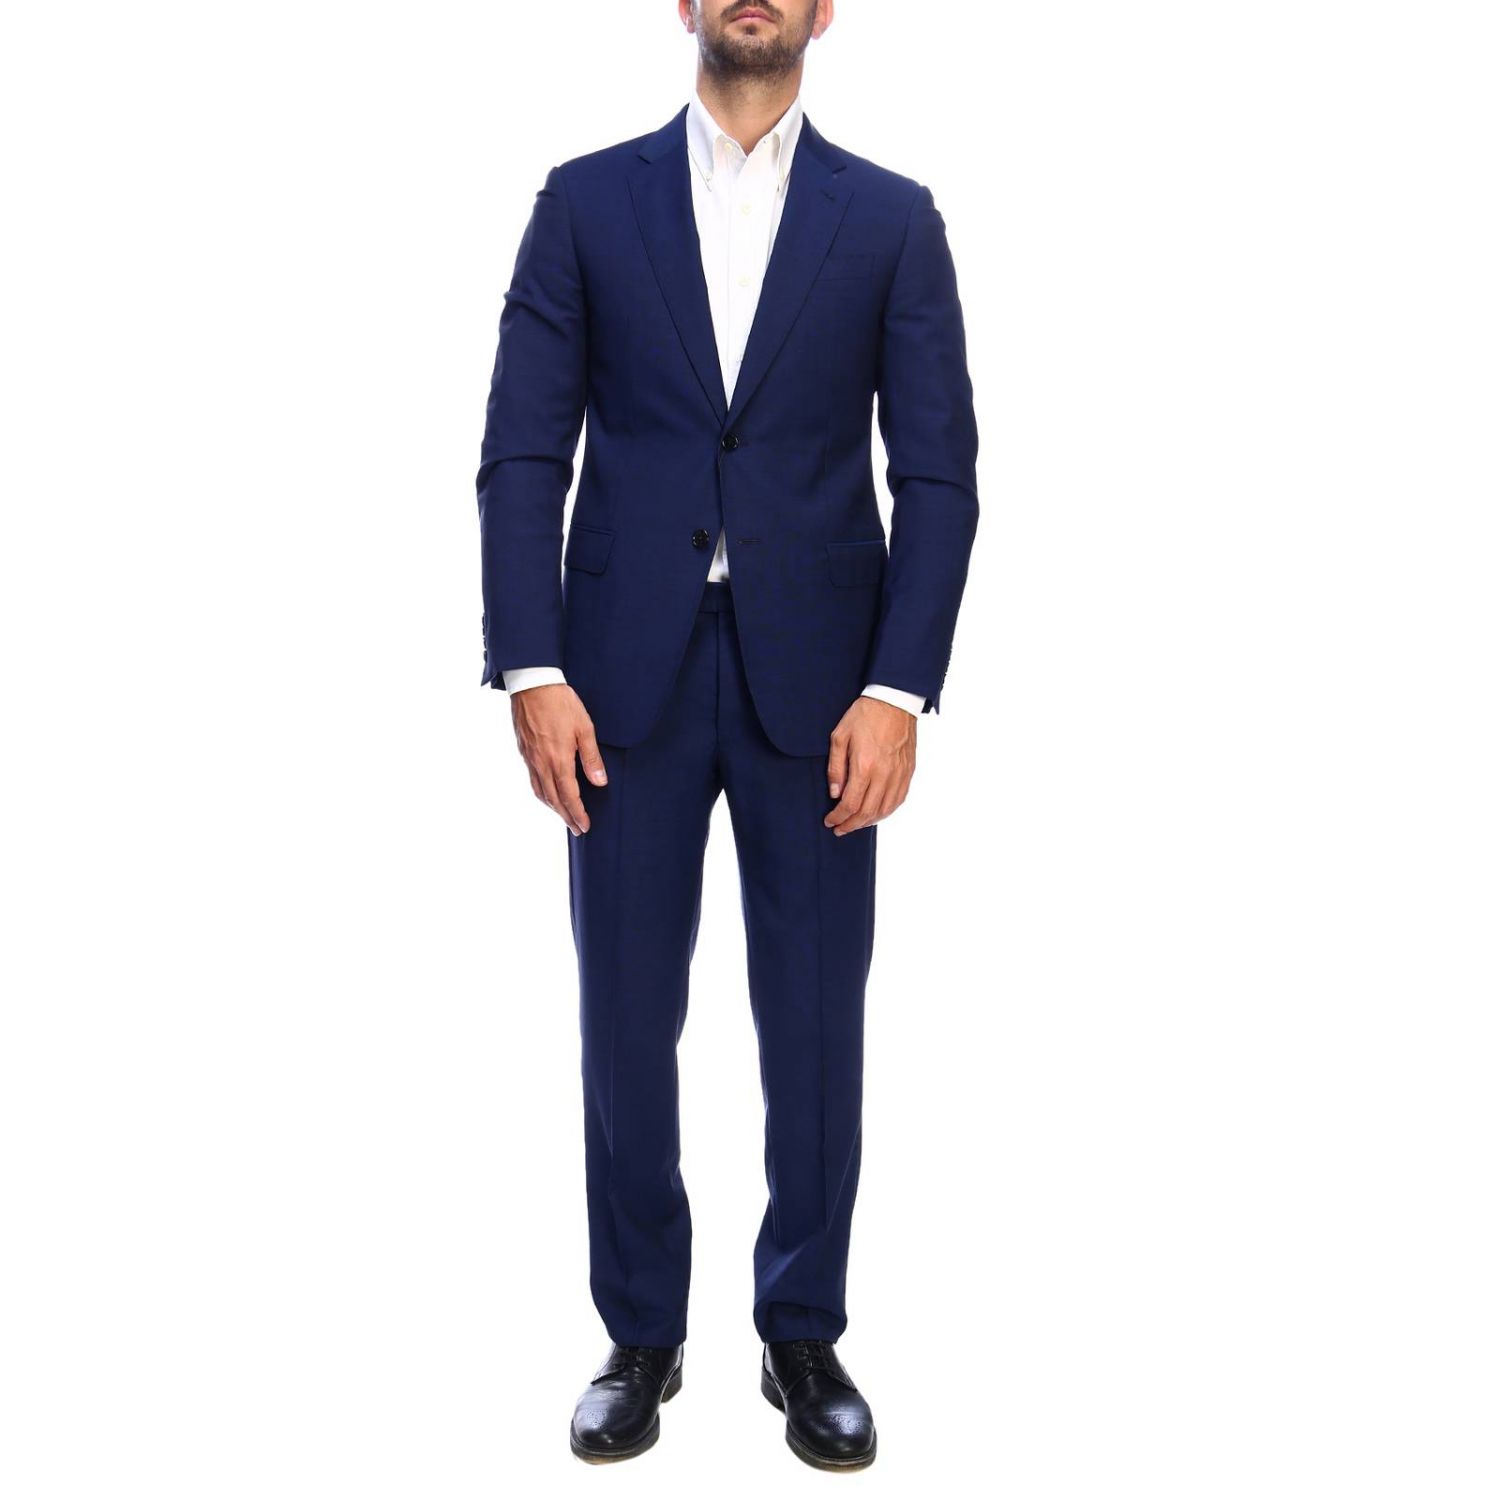 Emporio Armani Outlet: suit for man - Blue | Emporio Armani suit 21VGEB ...